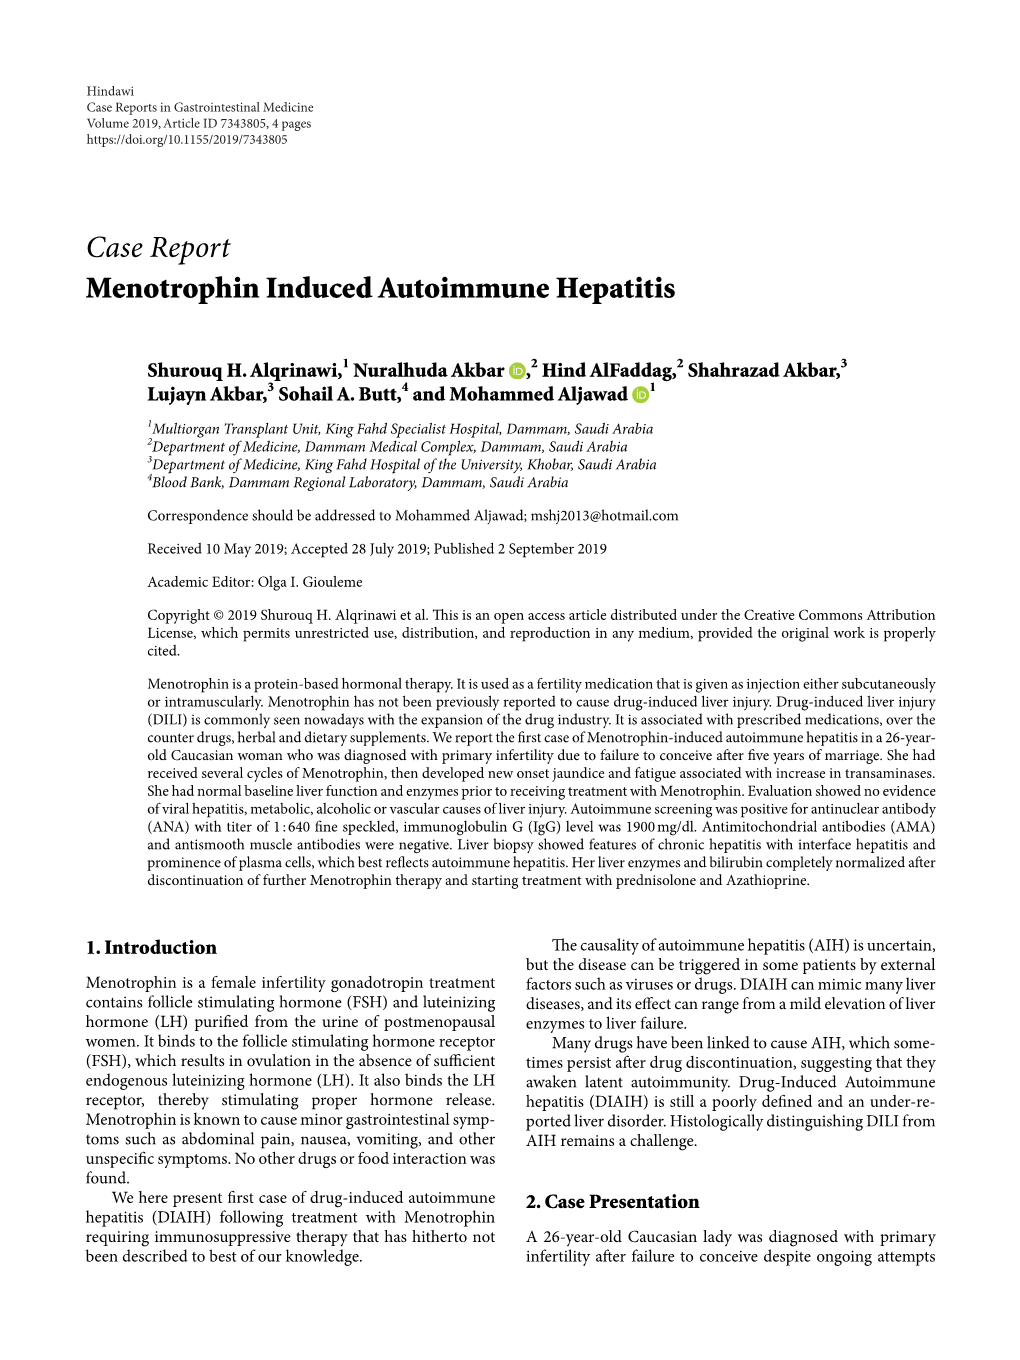 Case Report Menotrophin Induced Autoimmune Hepatitis